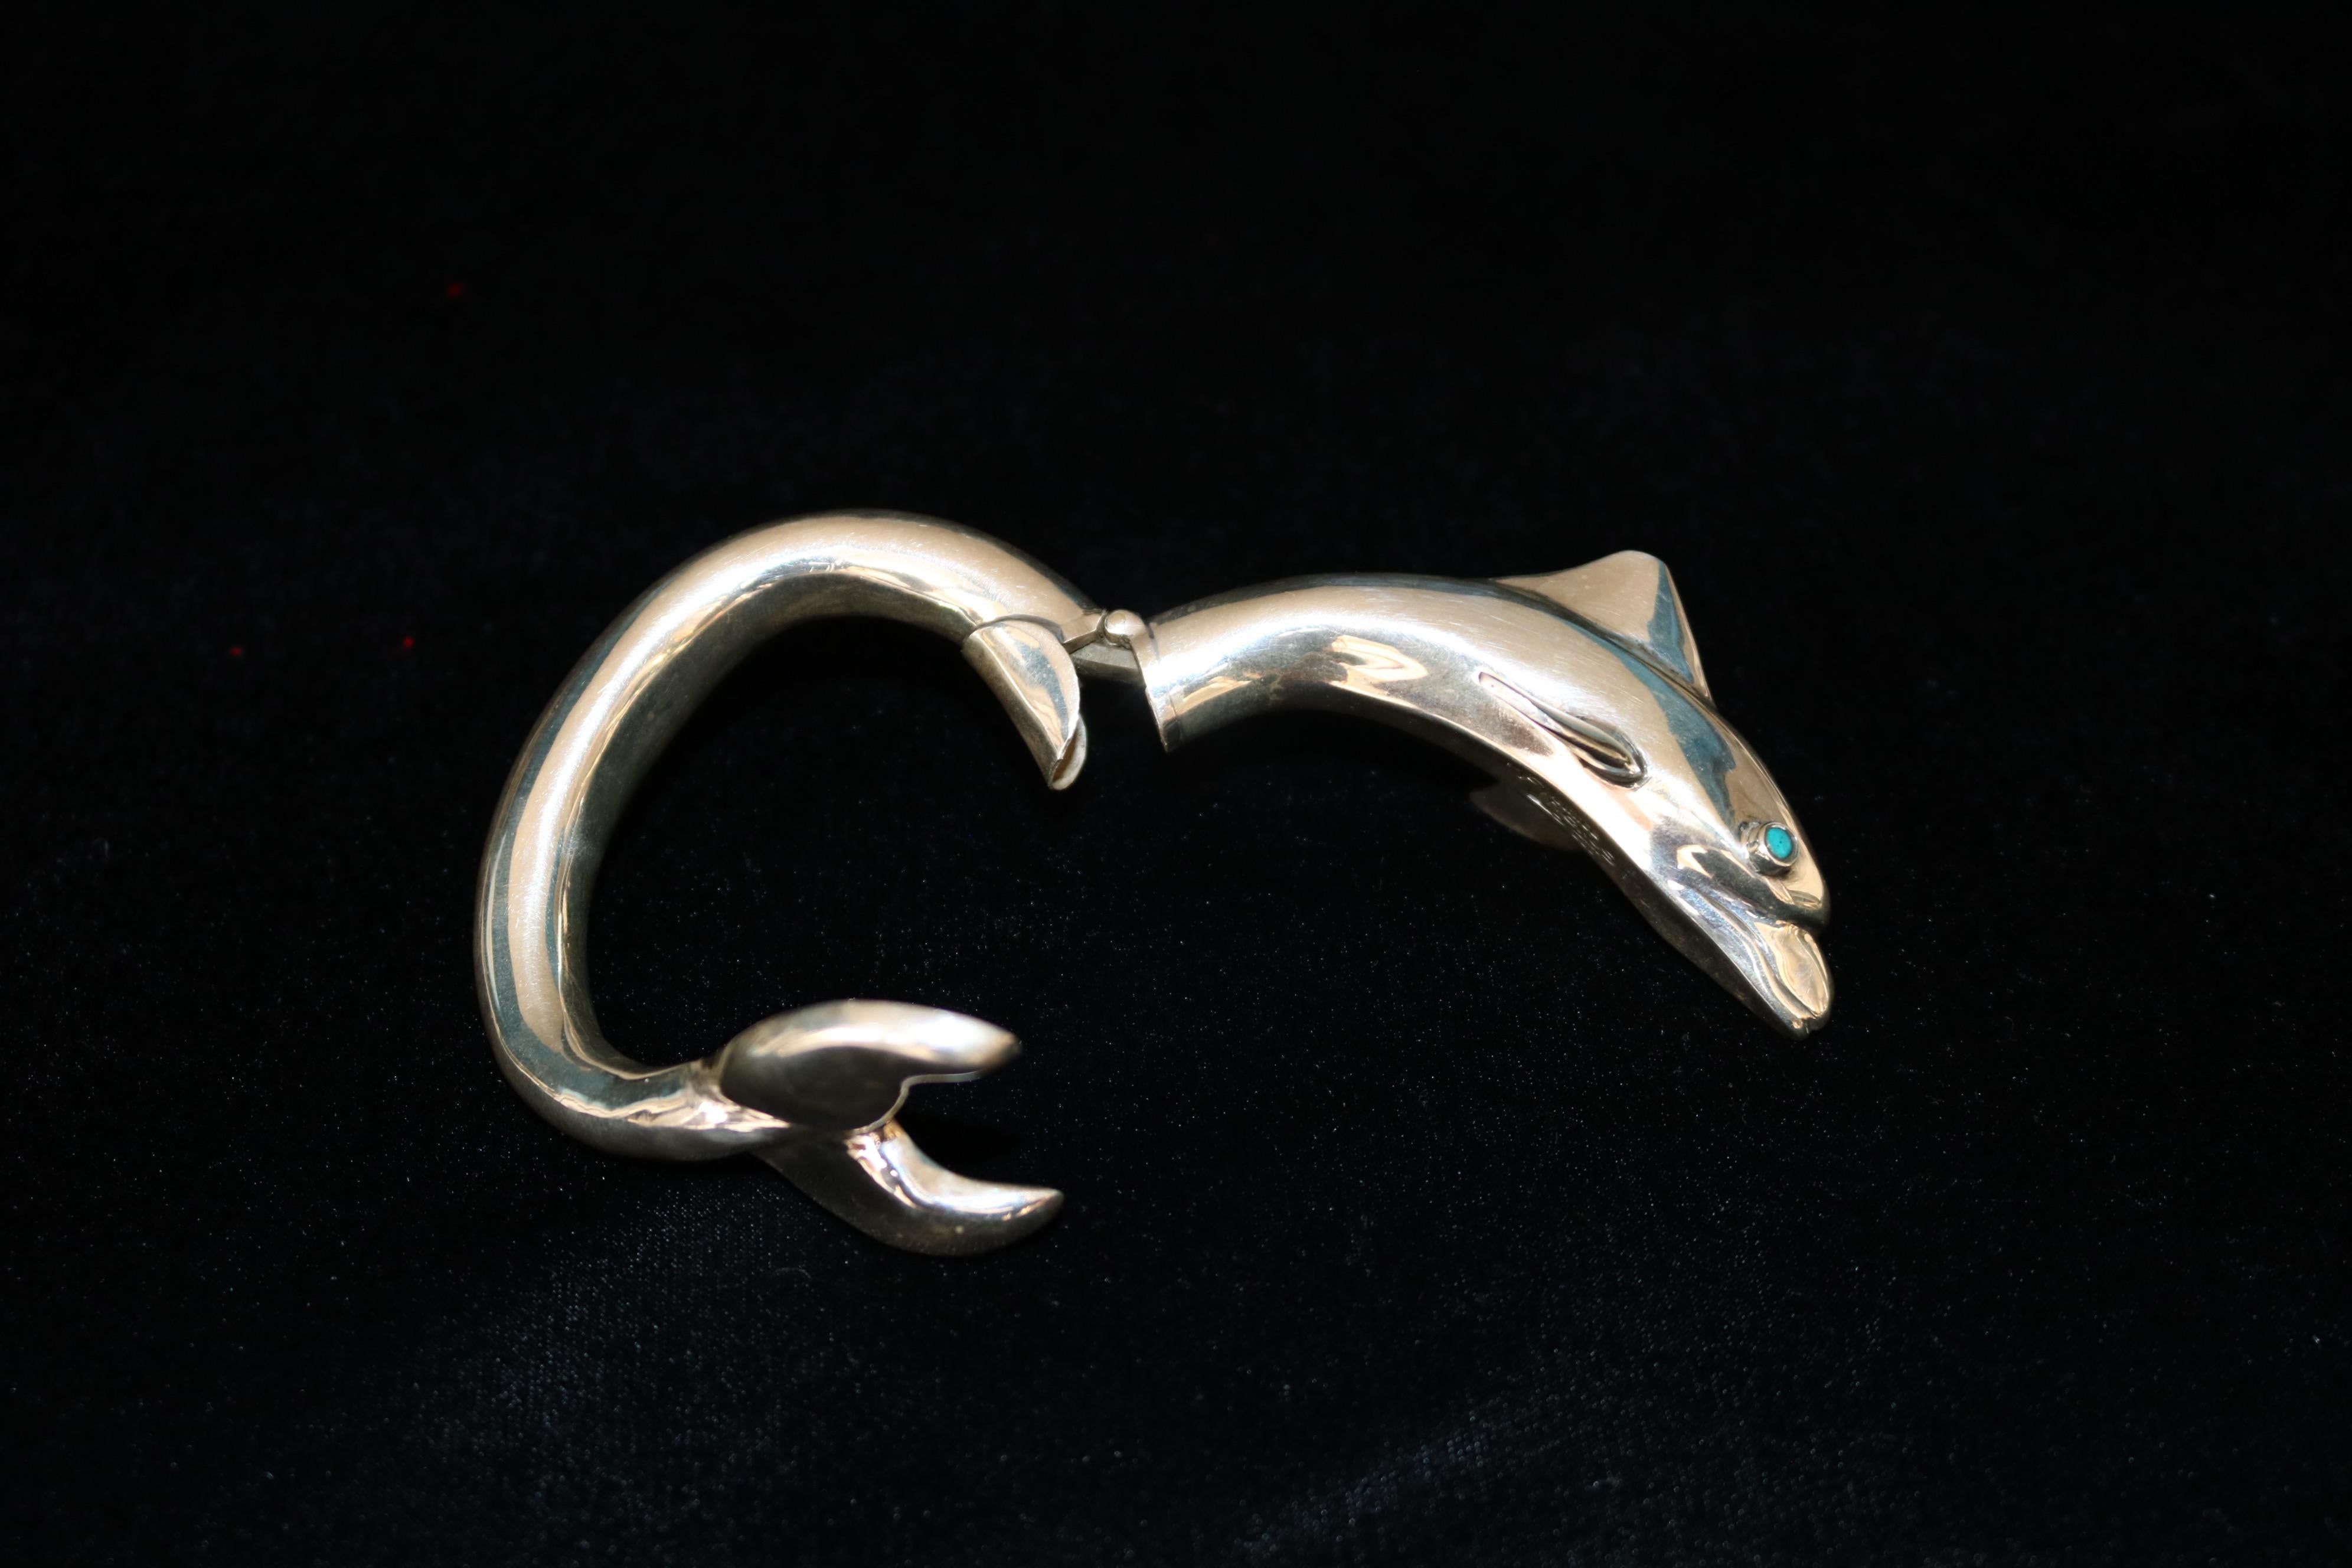 dolphin bracelet